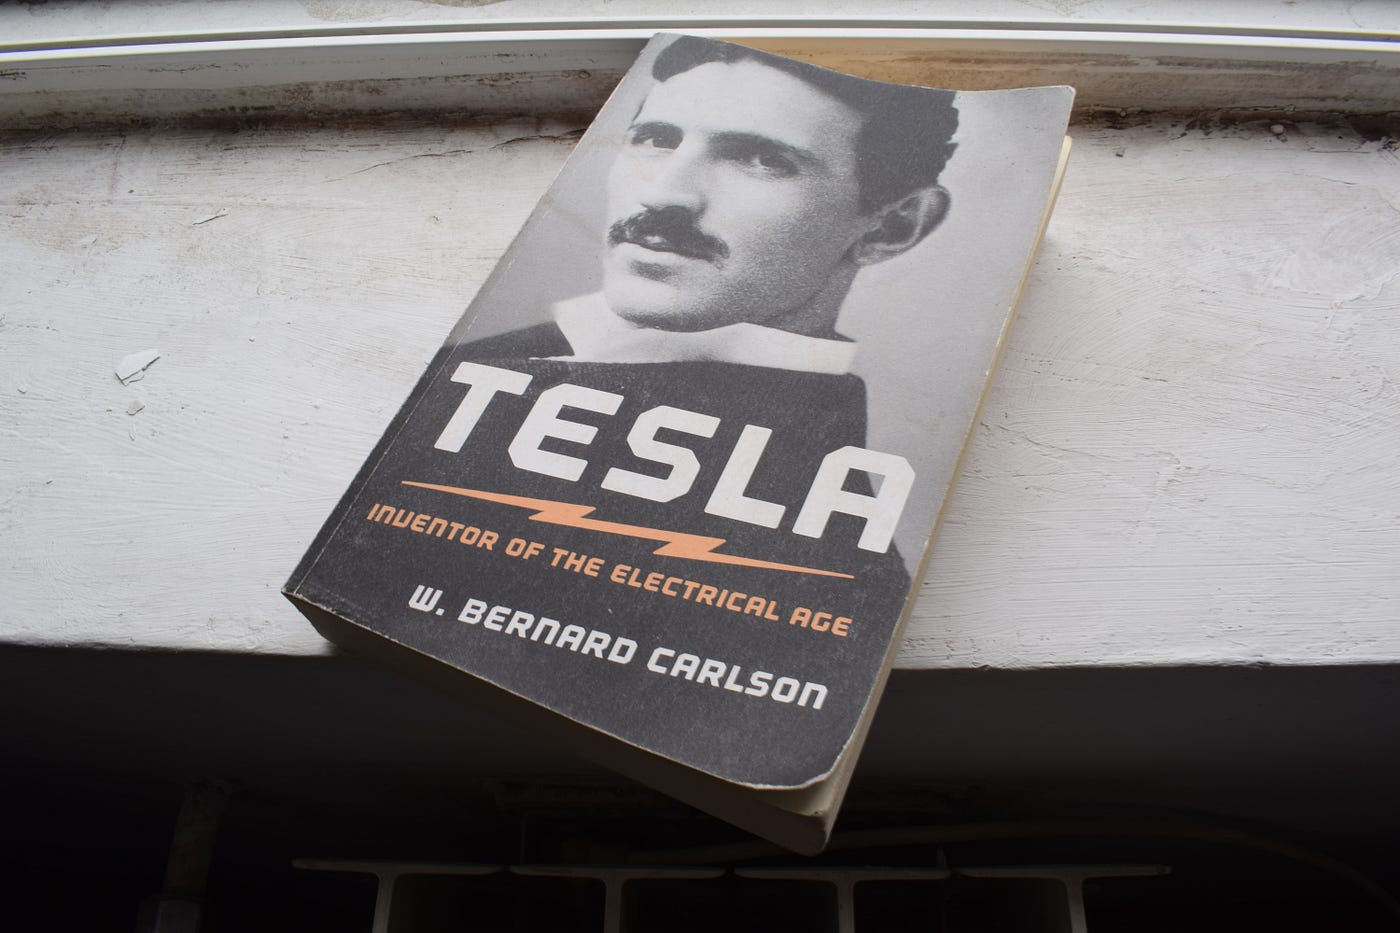 Nikola Tesla Birthday: Who Was Nikola Tesla, His Inventions & Life, GQ